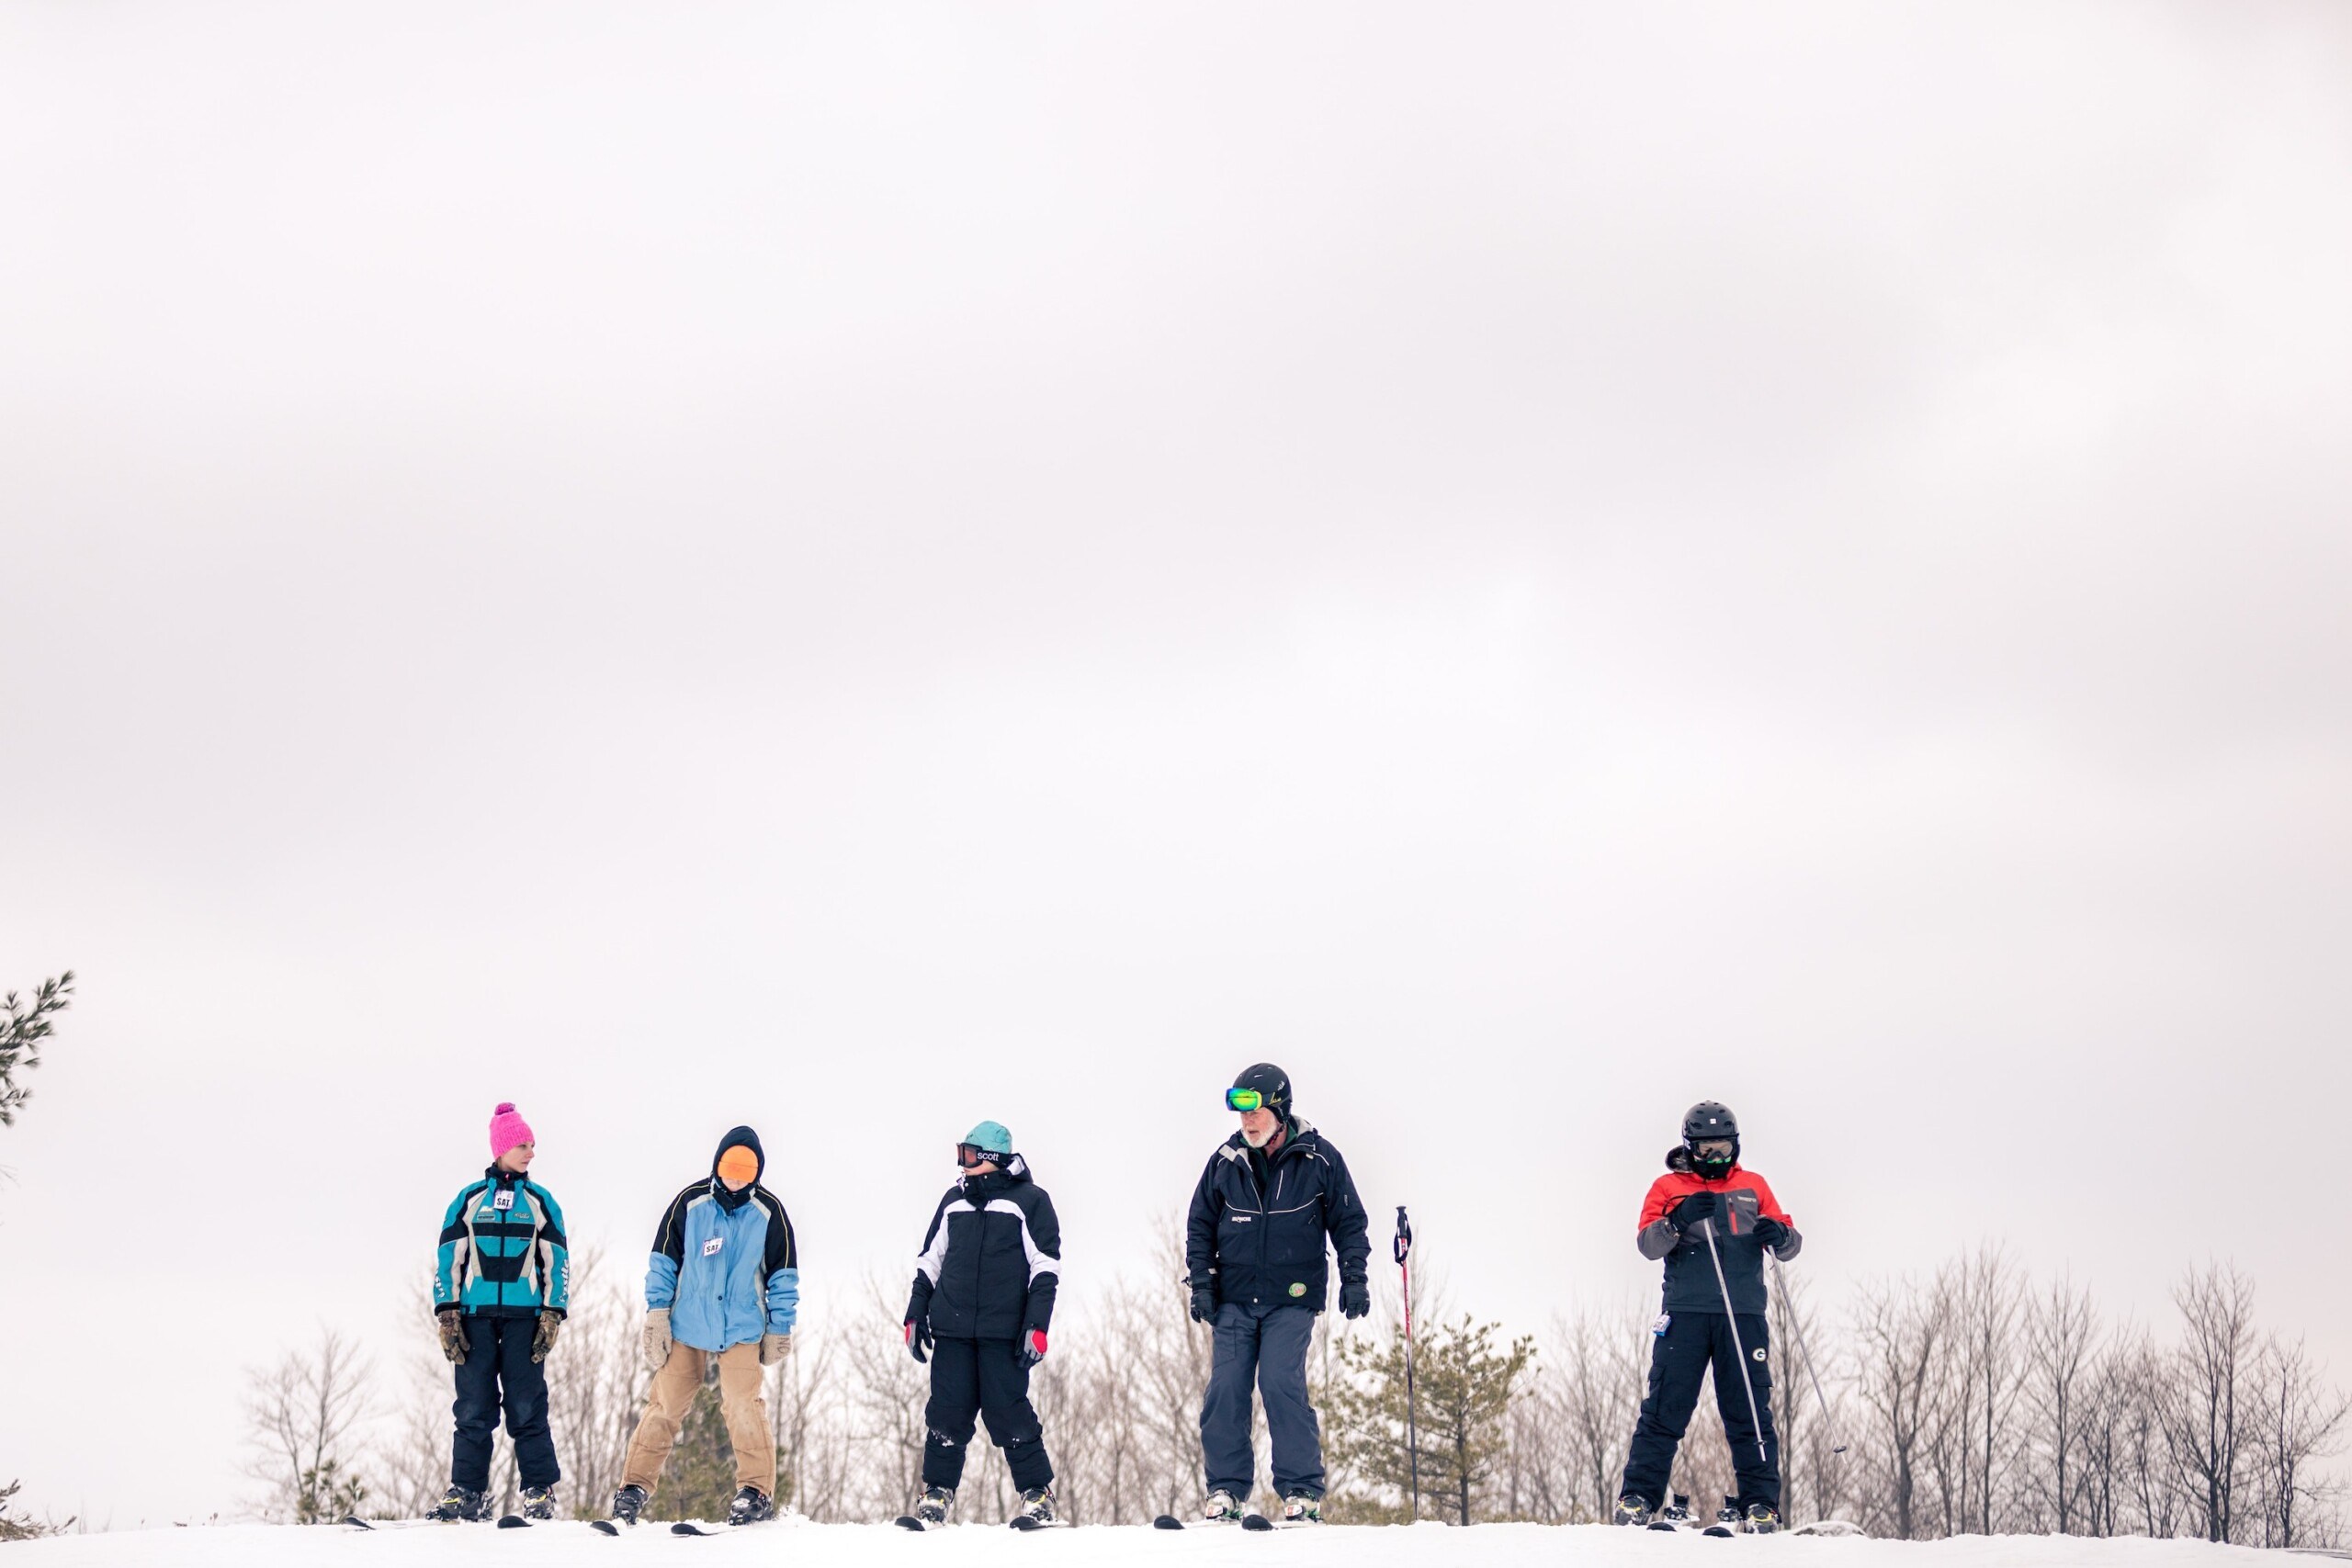 Ski instructor at Norway Mountain Michigan helping kids learn